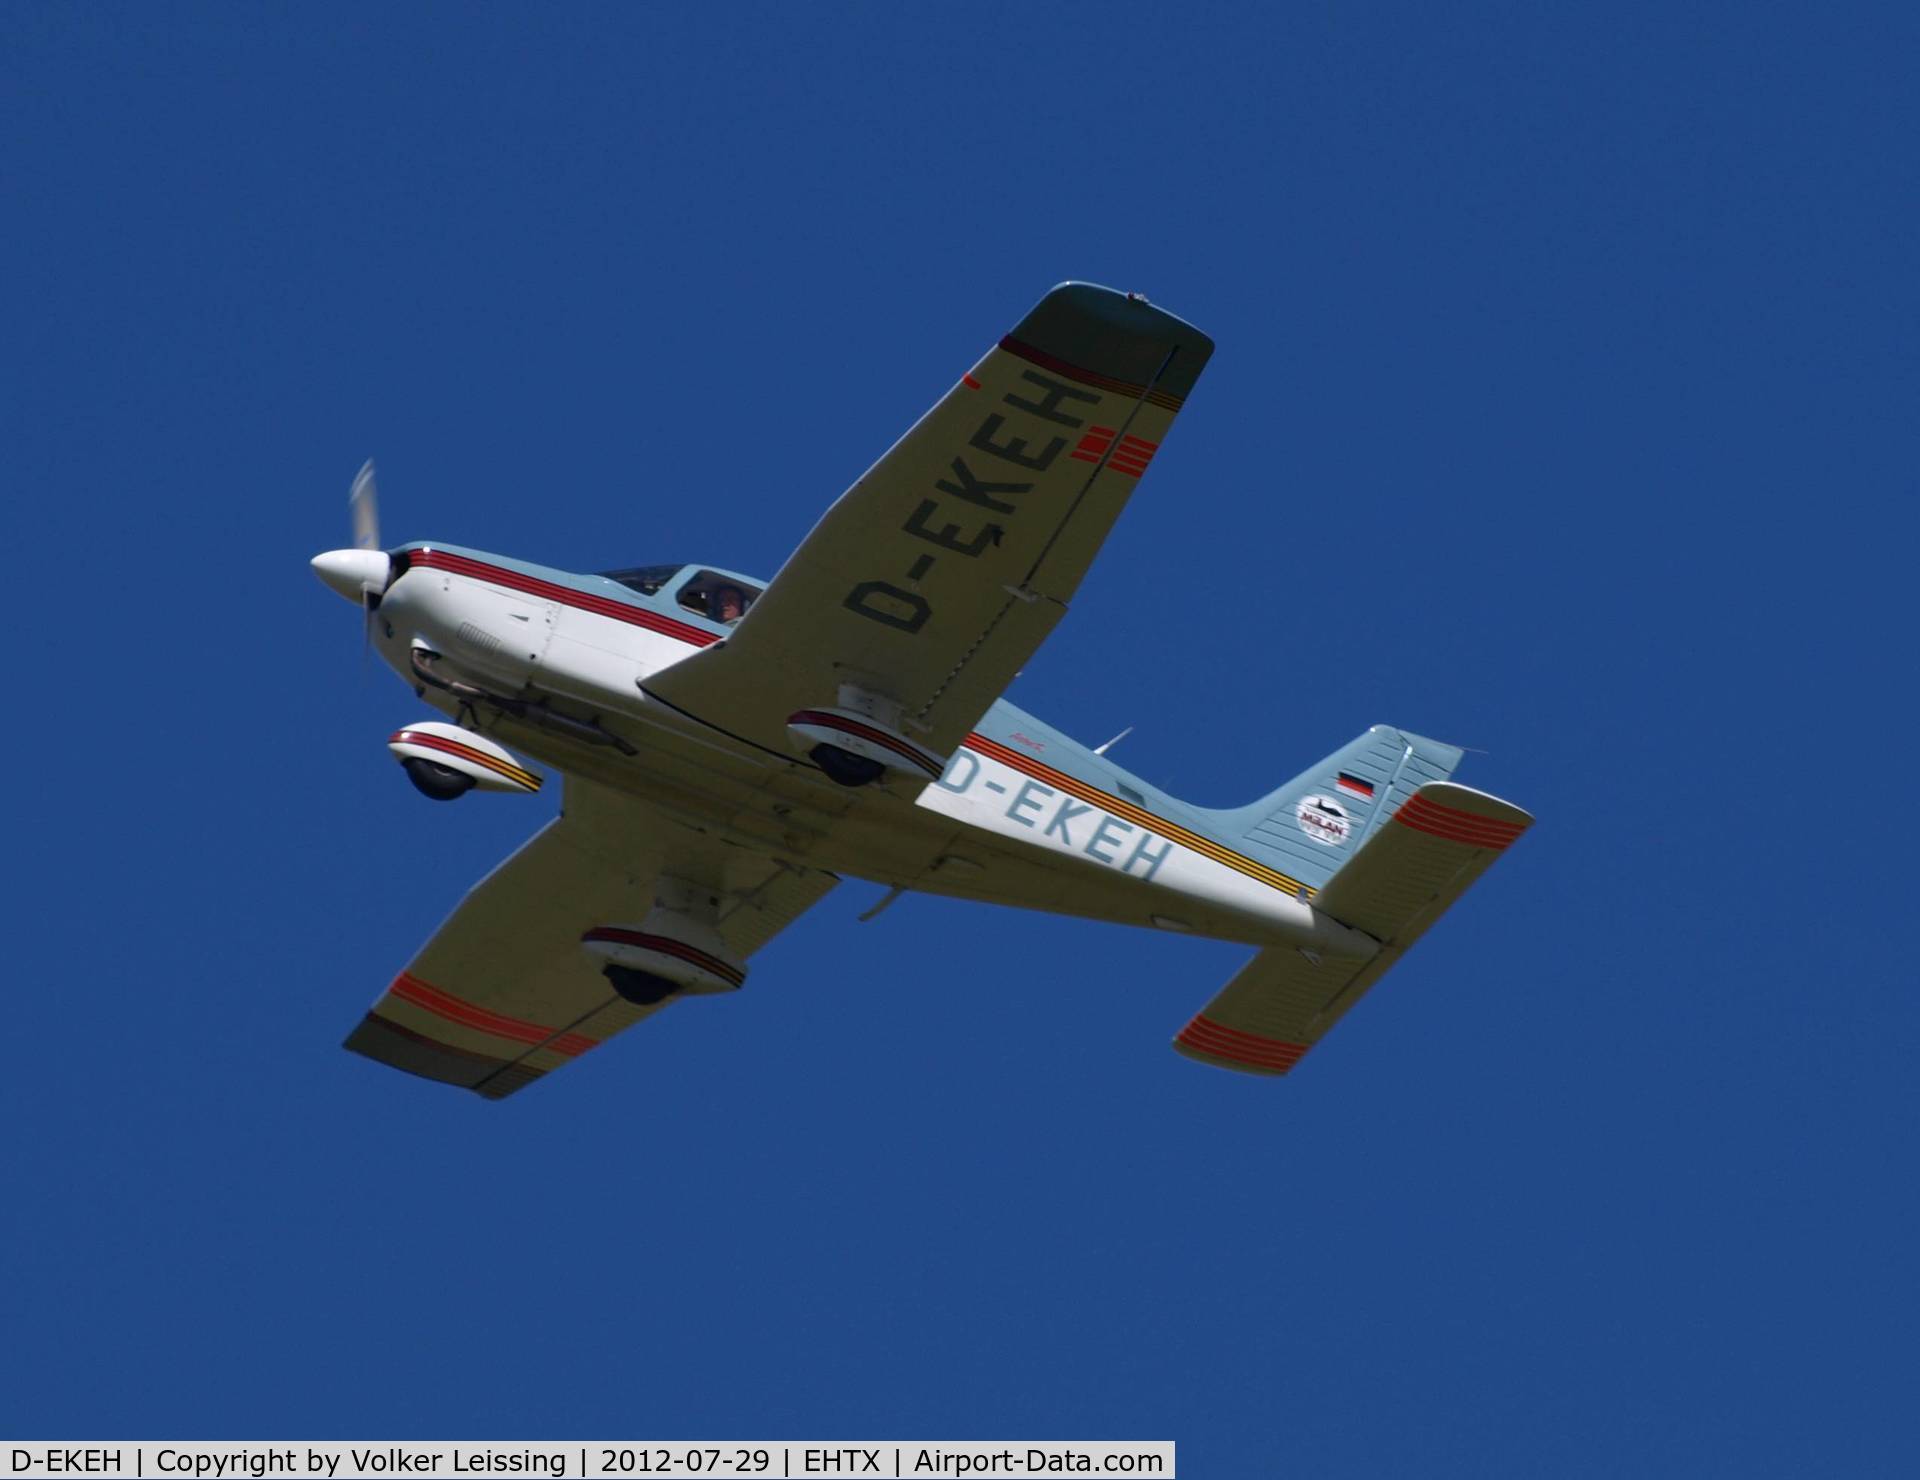 D-EKEH, 1994 Piper PA-28-181 ARCHER II C/N 2890080, climbing